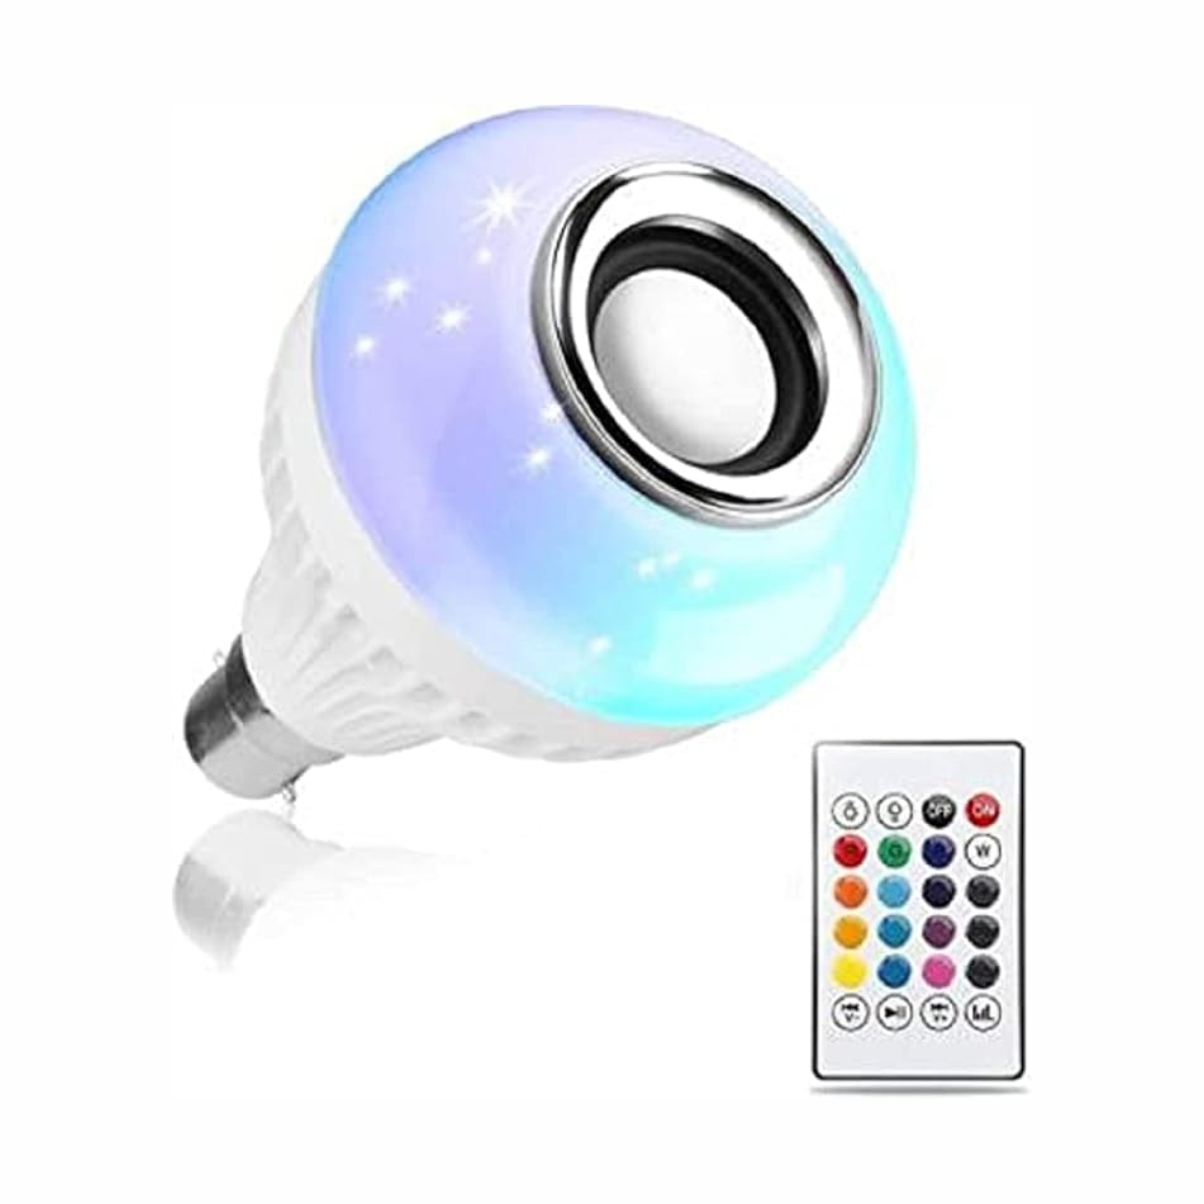 24 HSB Brand Multicolour Smart LED Bulb with Bluetooth Speaker